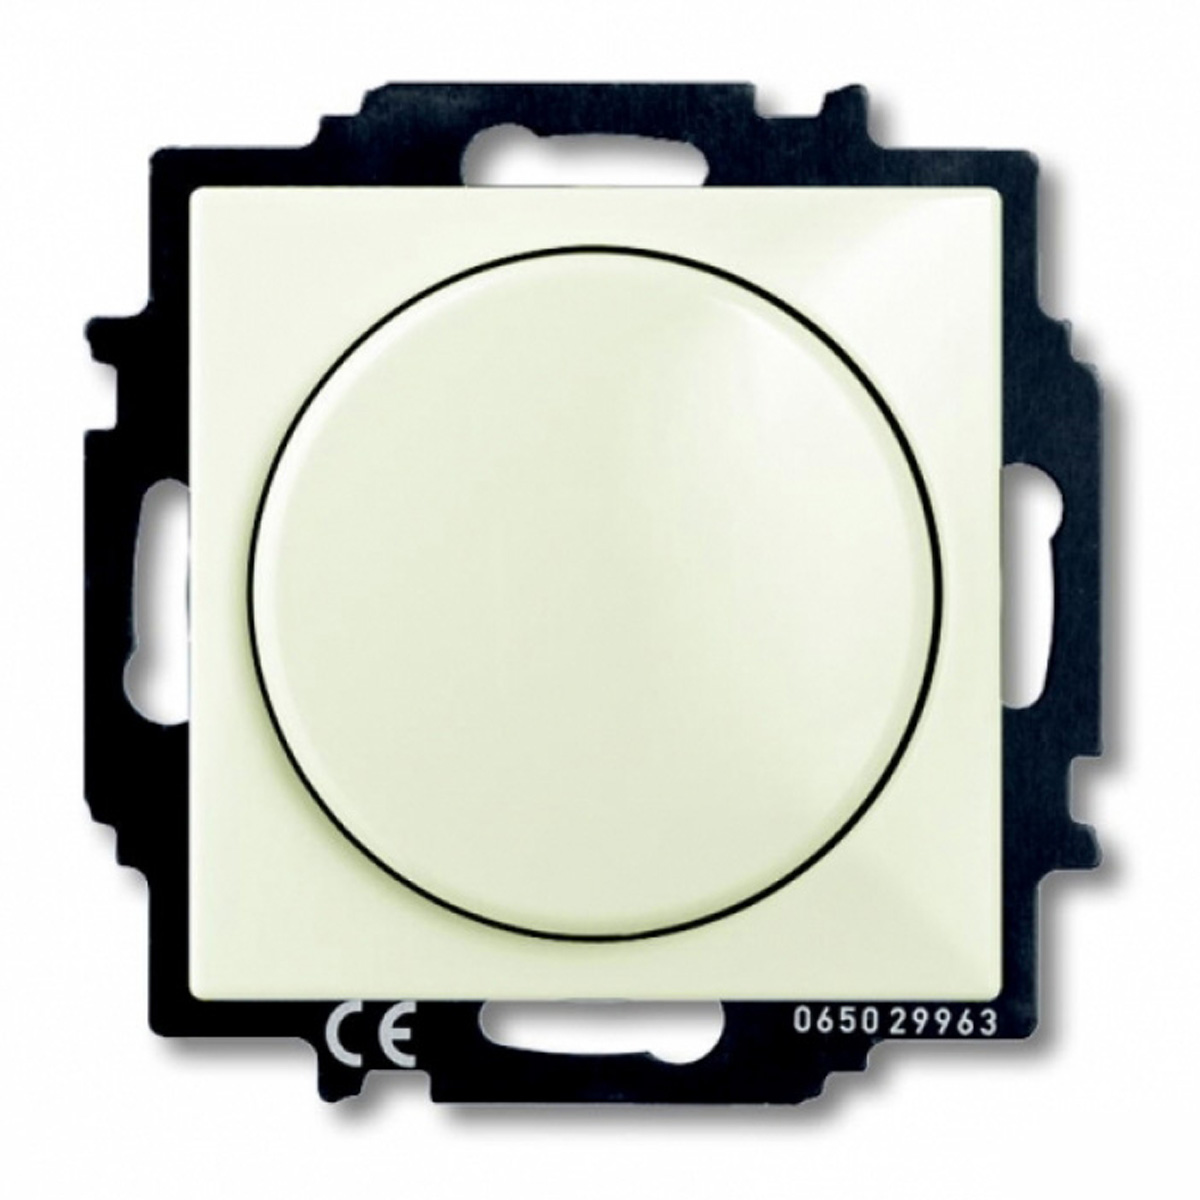 6515-0-0847 (2251 UCGL-96-5), Механизм светорегулятора Busch-Dimmer с центральной платой, 60-400 Вт, серия Basic 55, цвет chalet-white, ABB фото